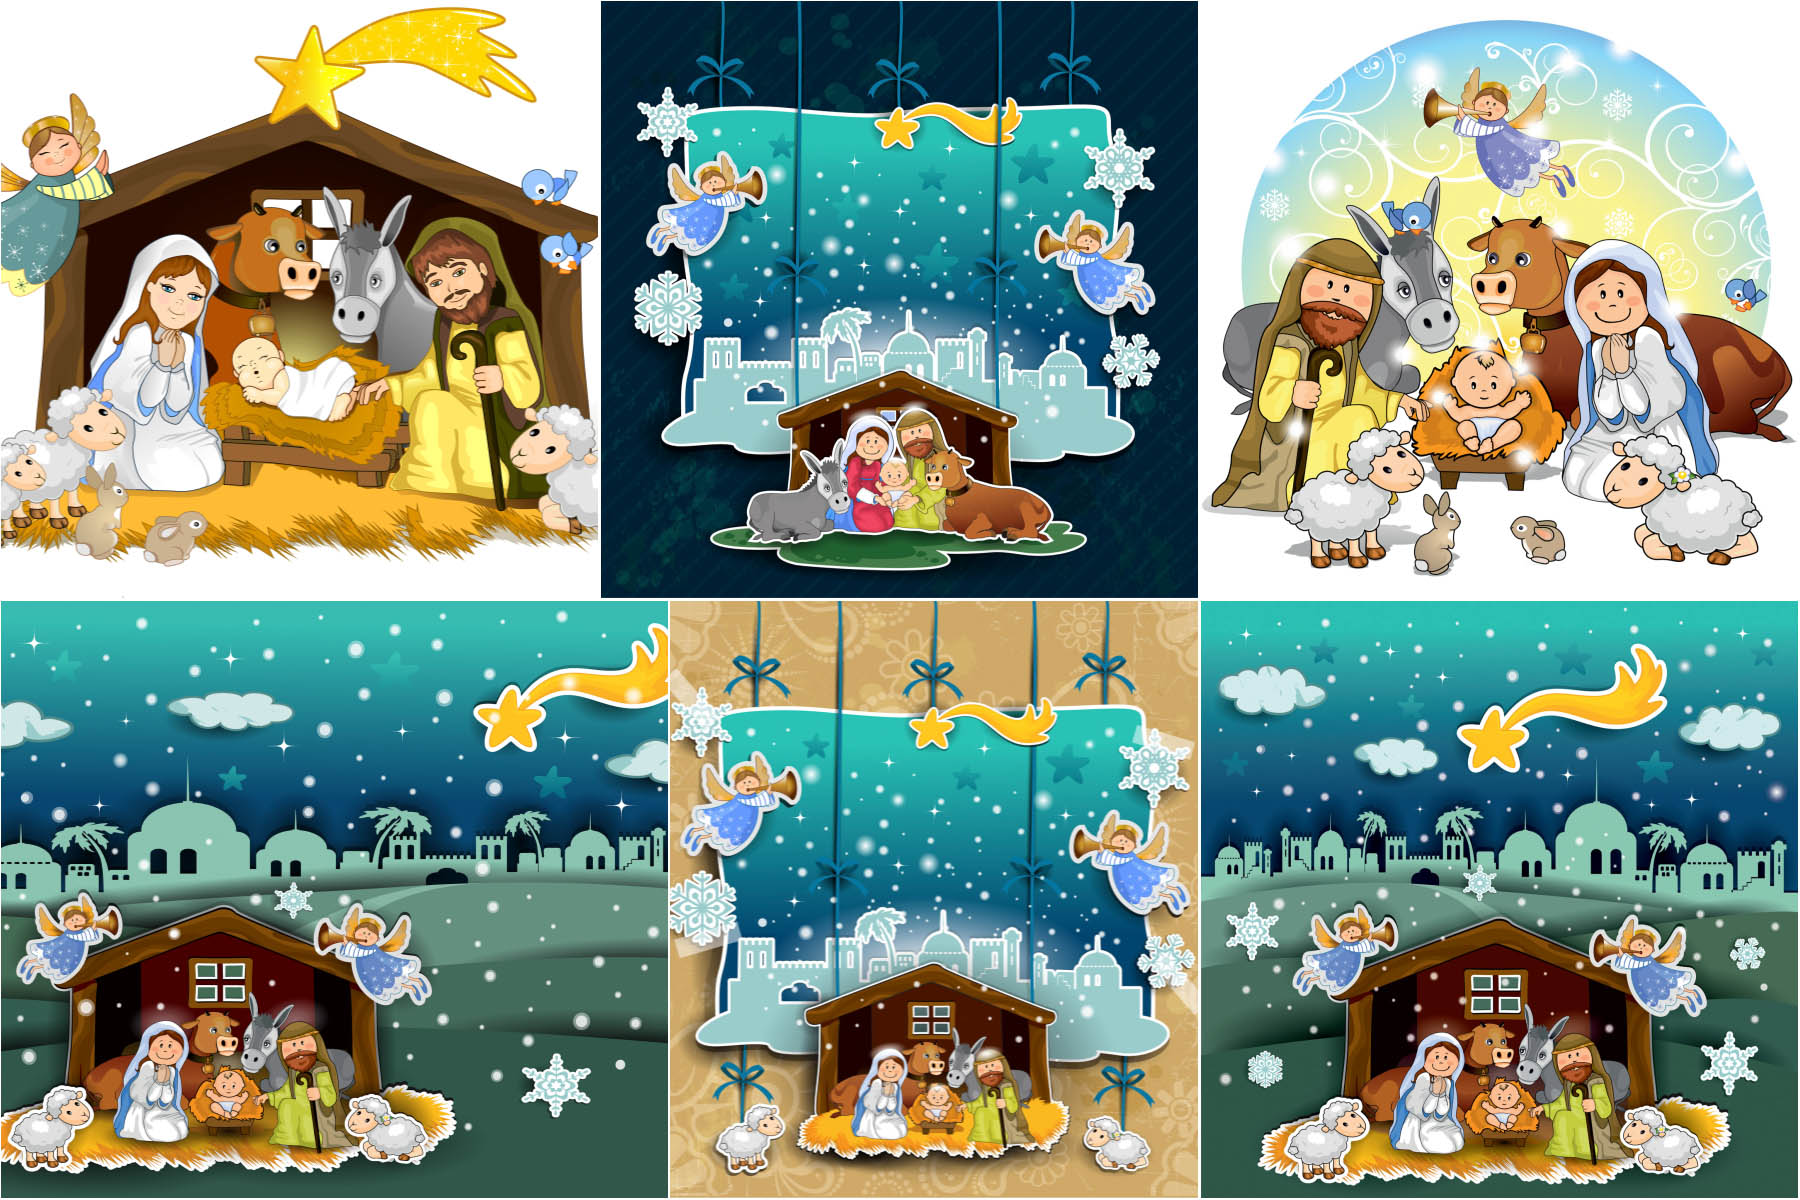 Illustration of the birth of Jesus